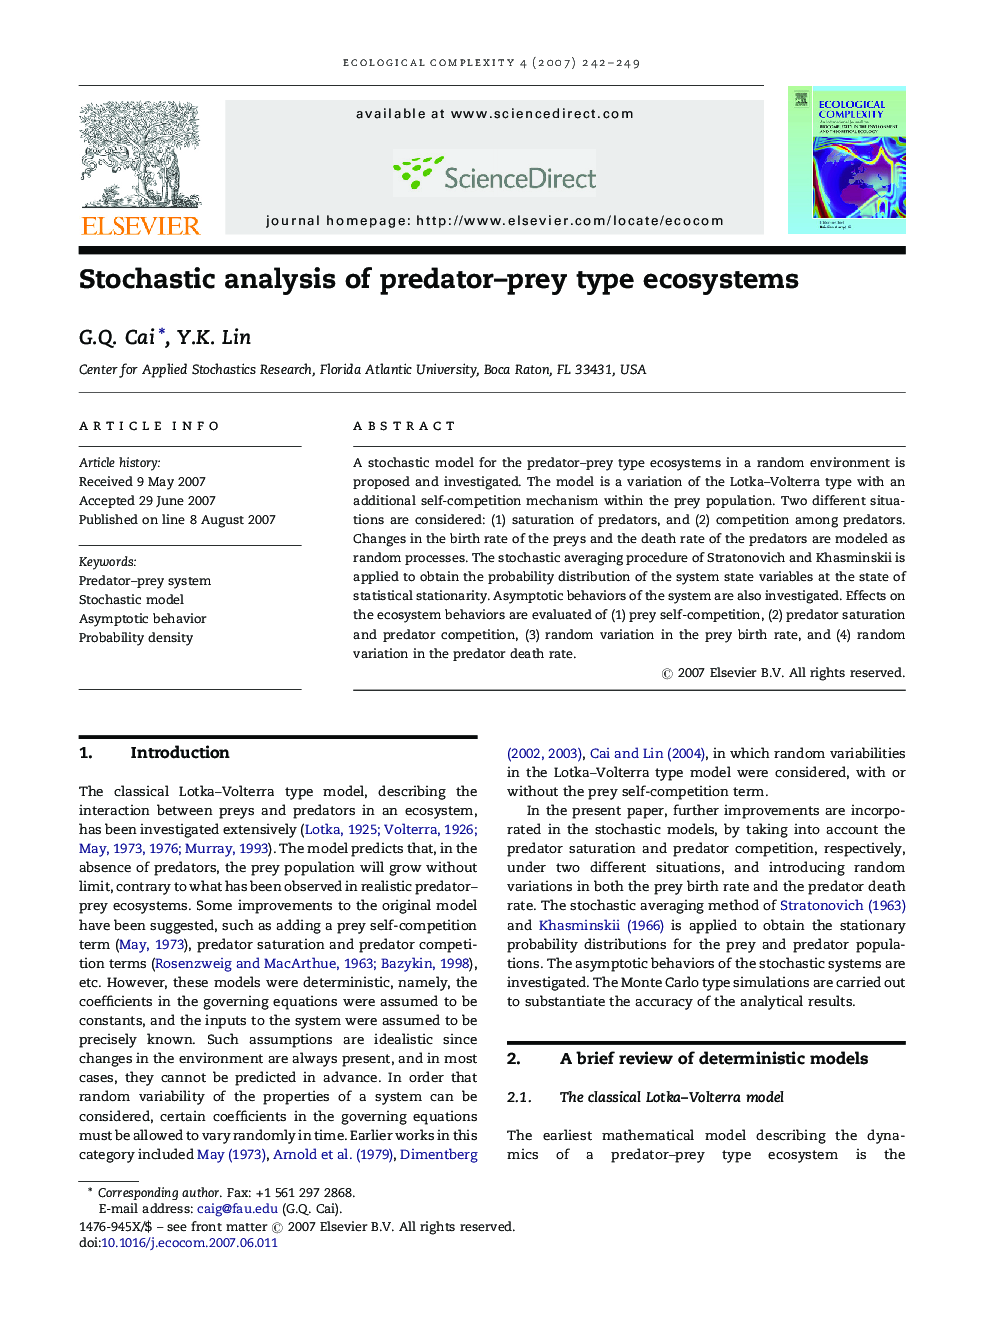 Stochastic analysis of predator-prey type ecosystems